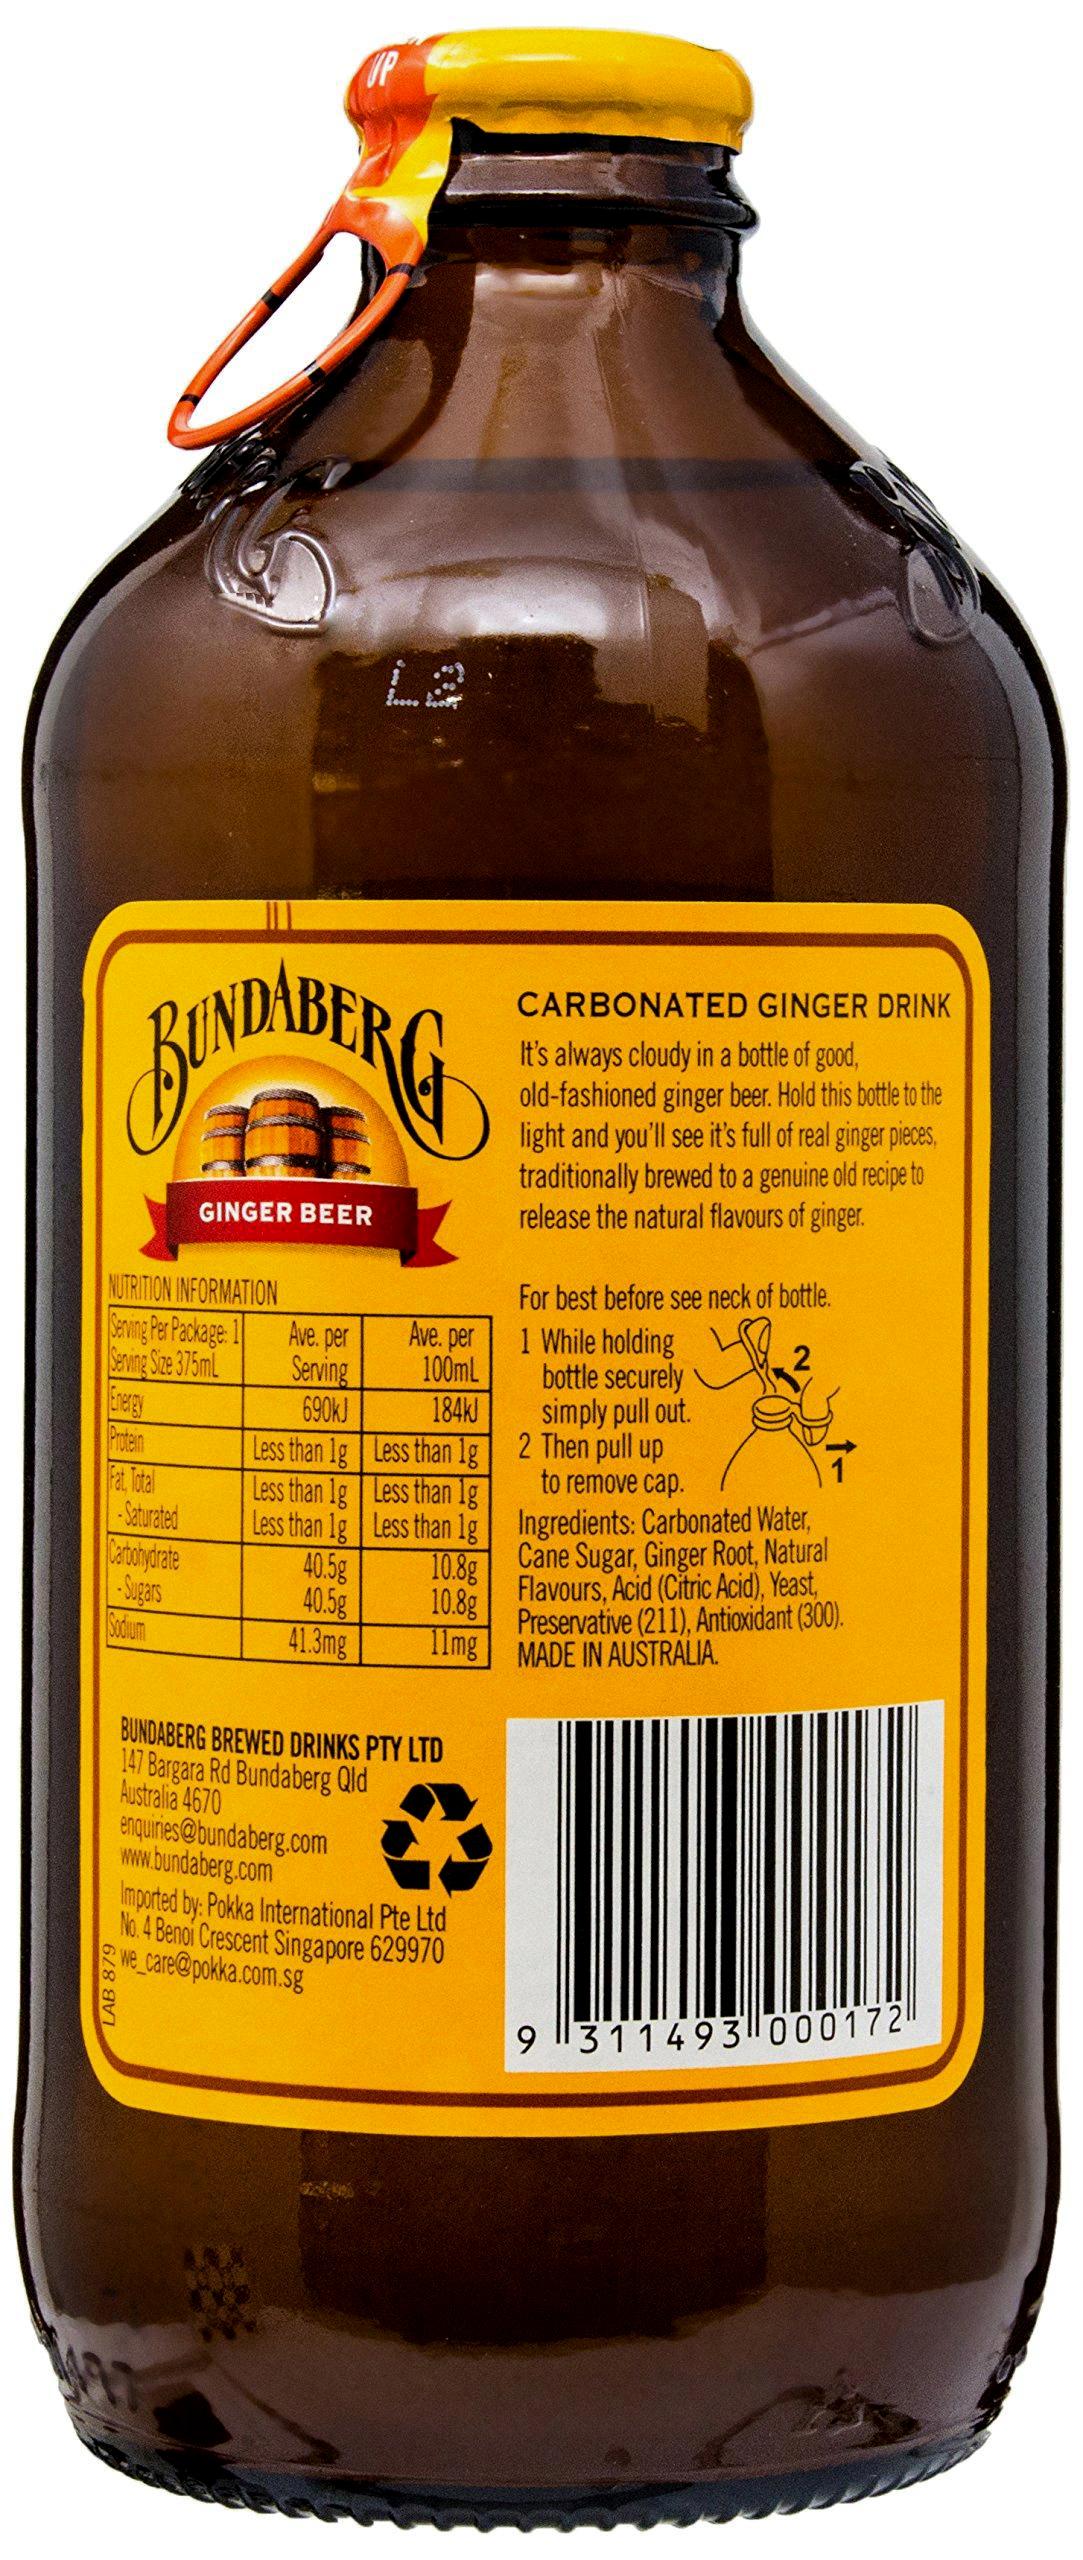 is bundaberg ginger beer gluten free